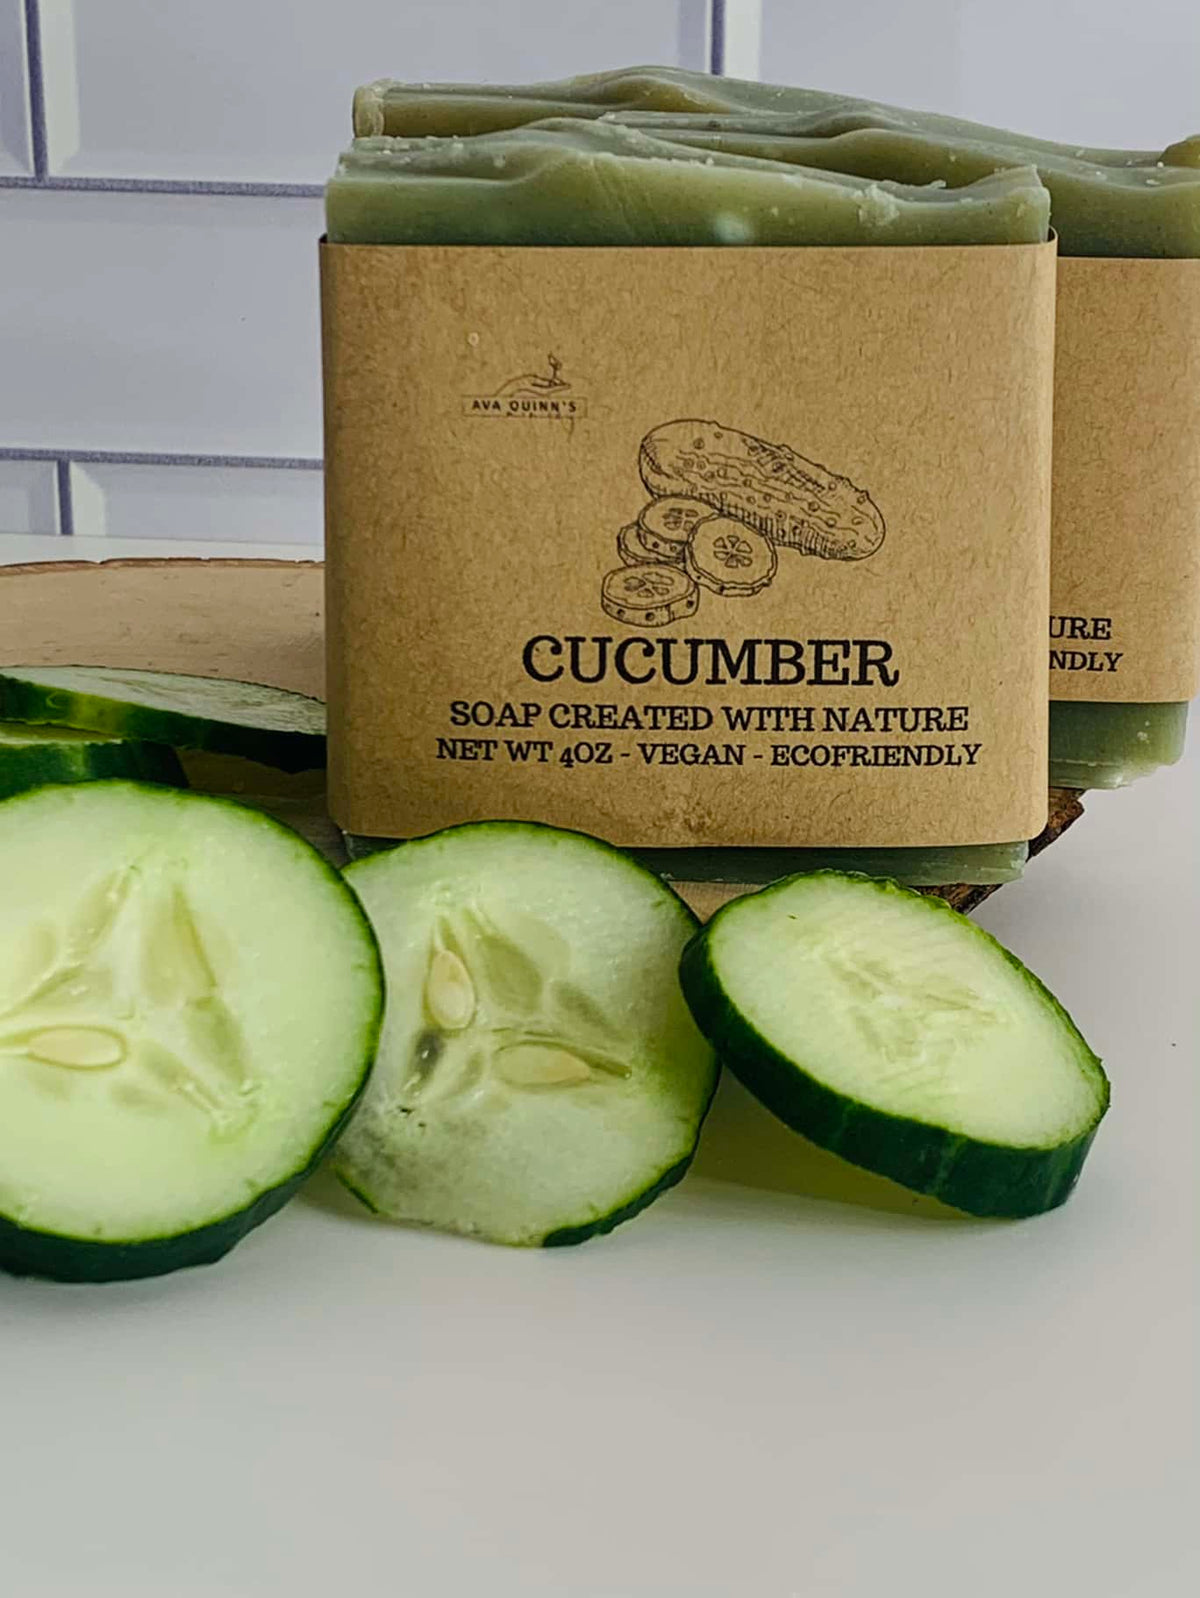 Cucumber from Ava Quinn's